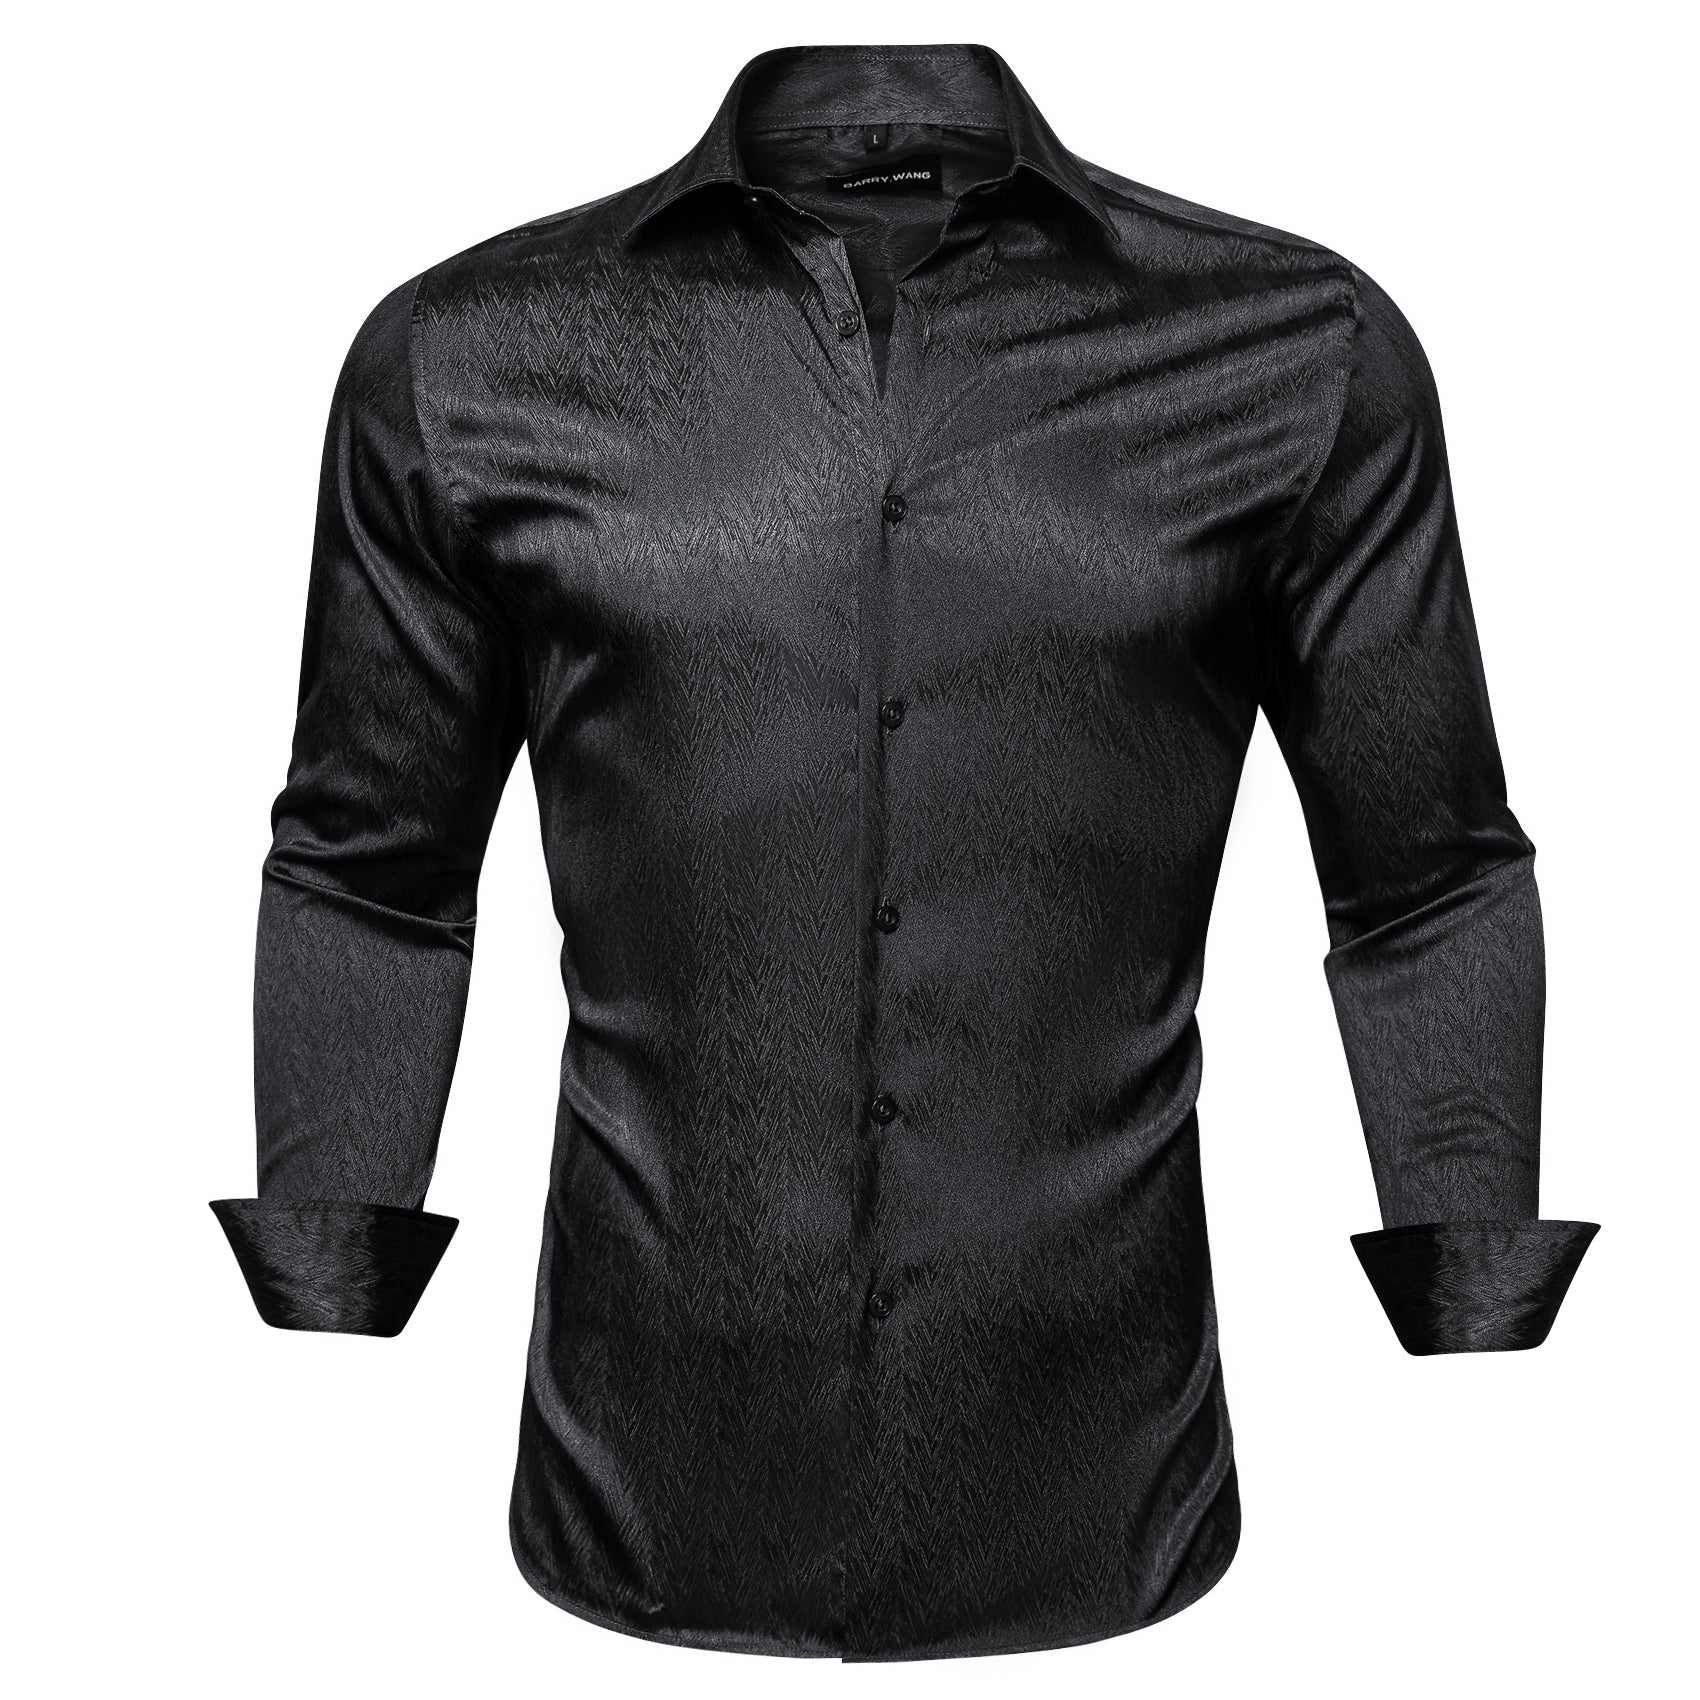 Barry.wang Button Down Shirt Classy Silk Black Solid Long Sleeve Shirt